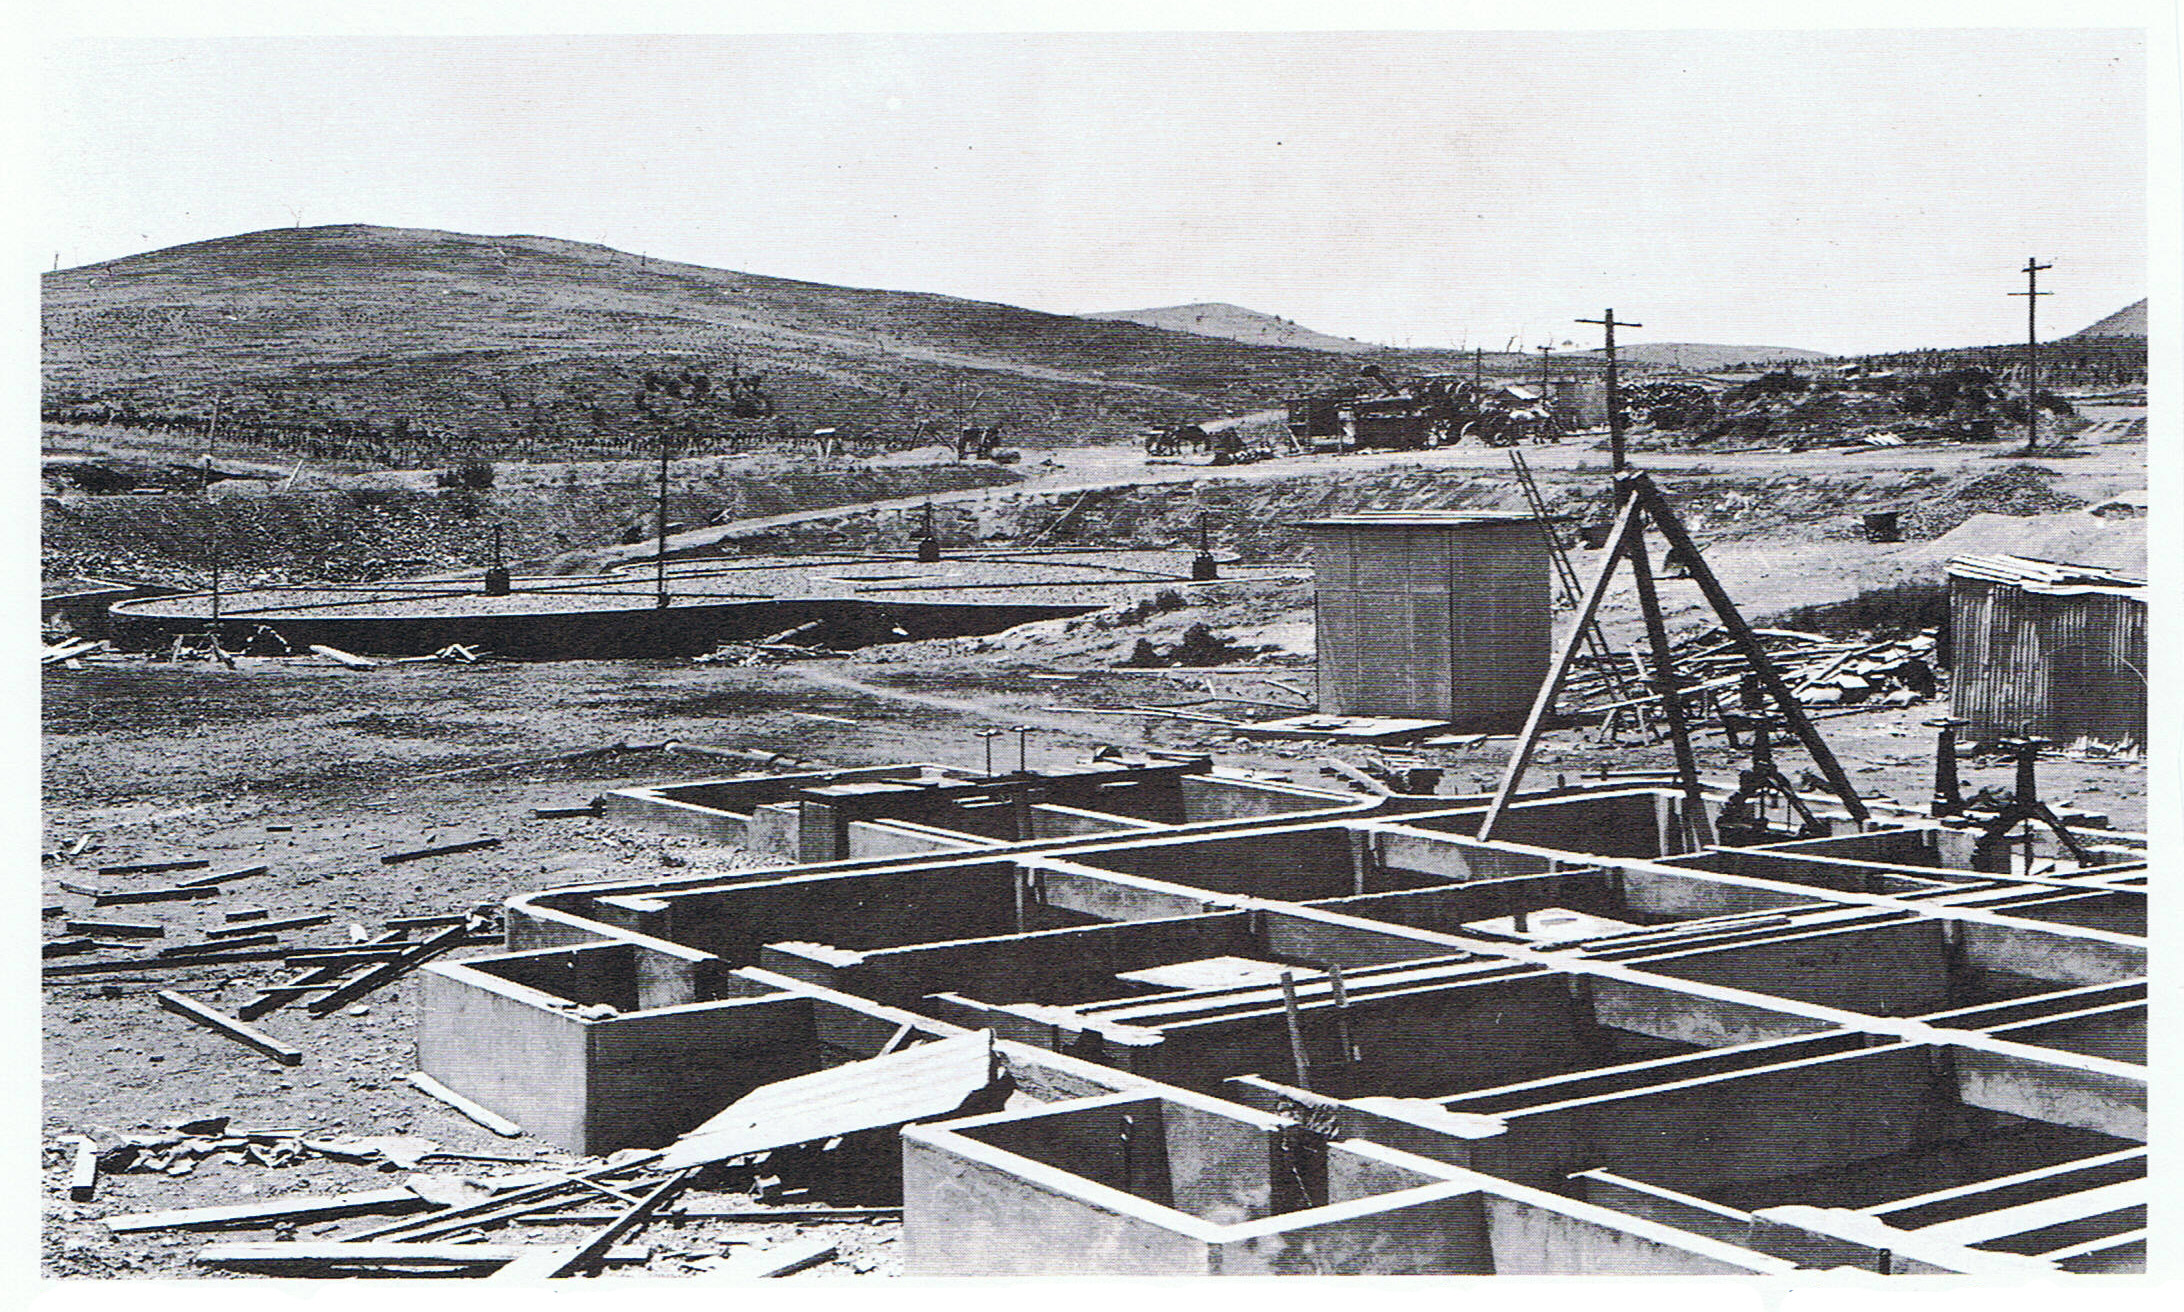 Construction of the original sedimentation